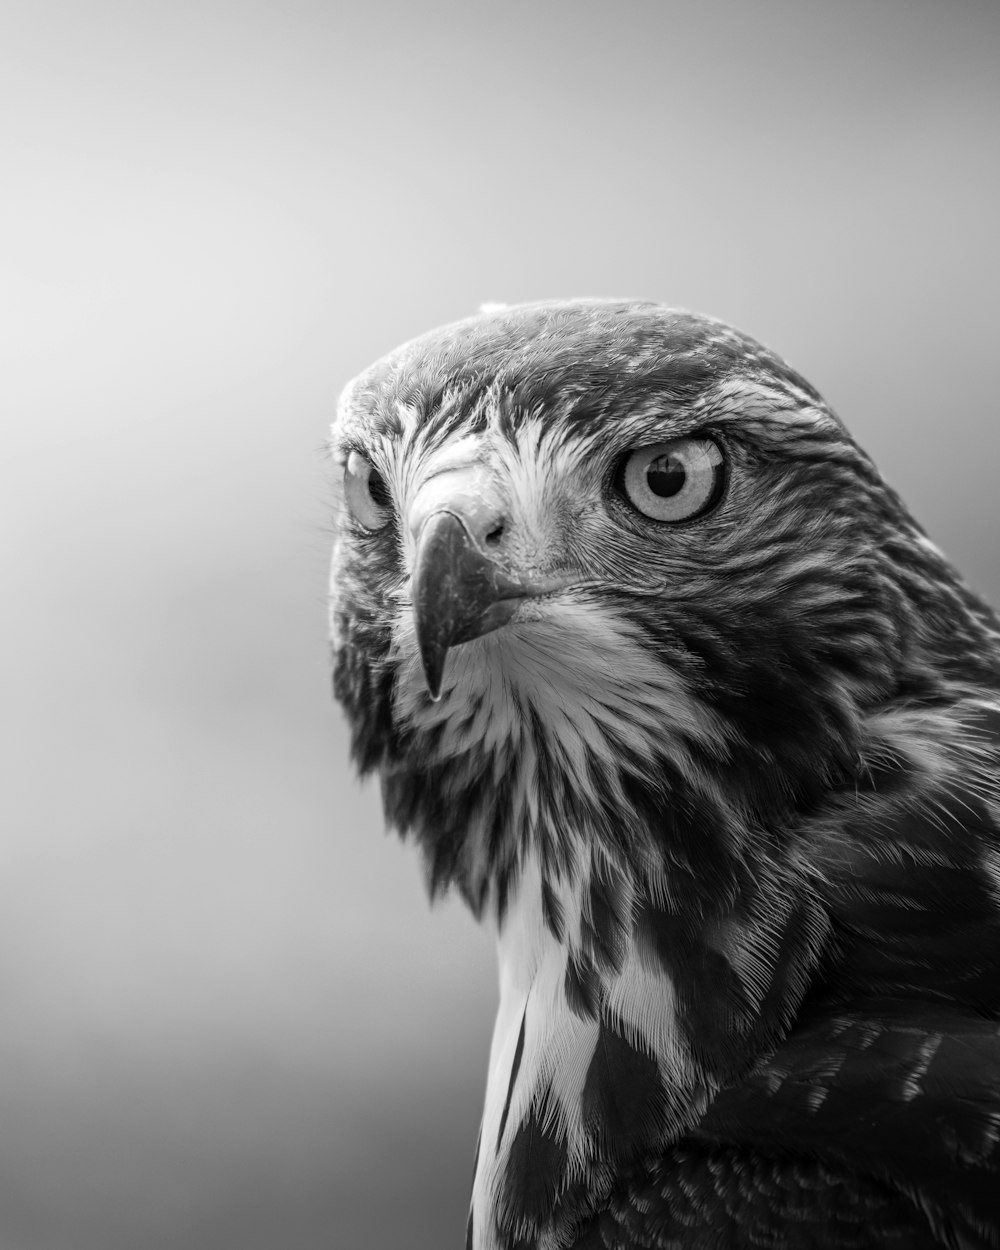 grayscale photo of a eagle